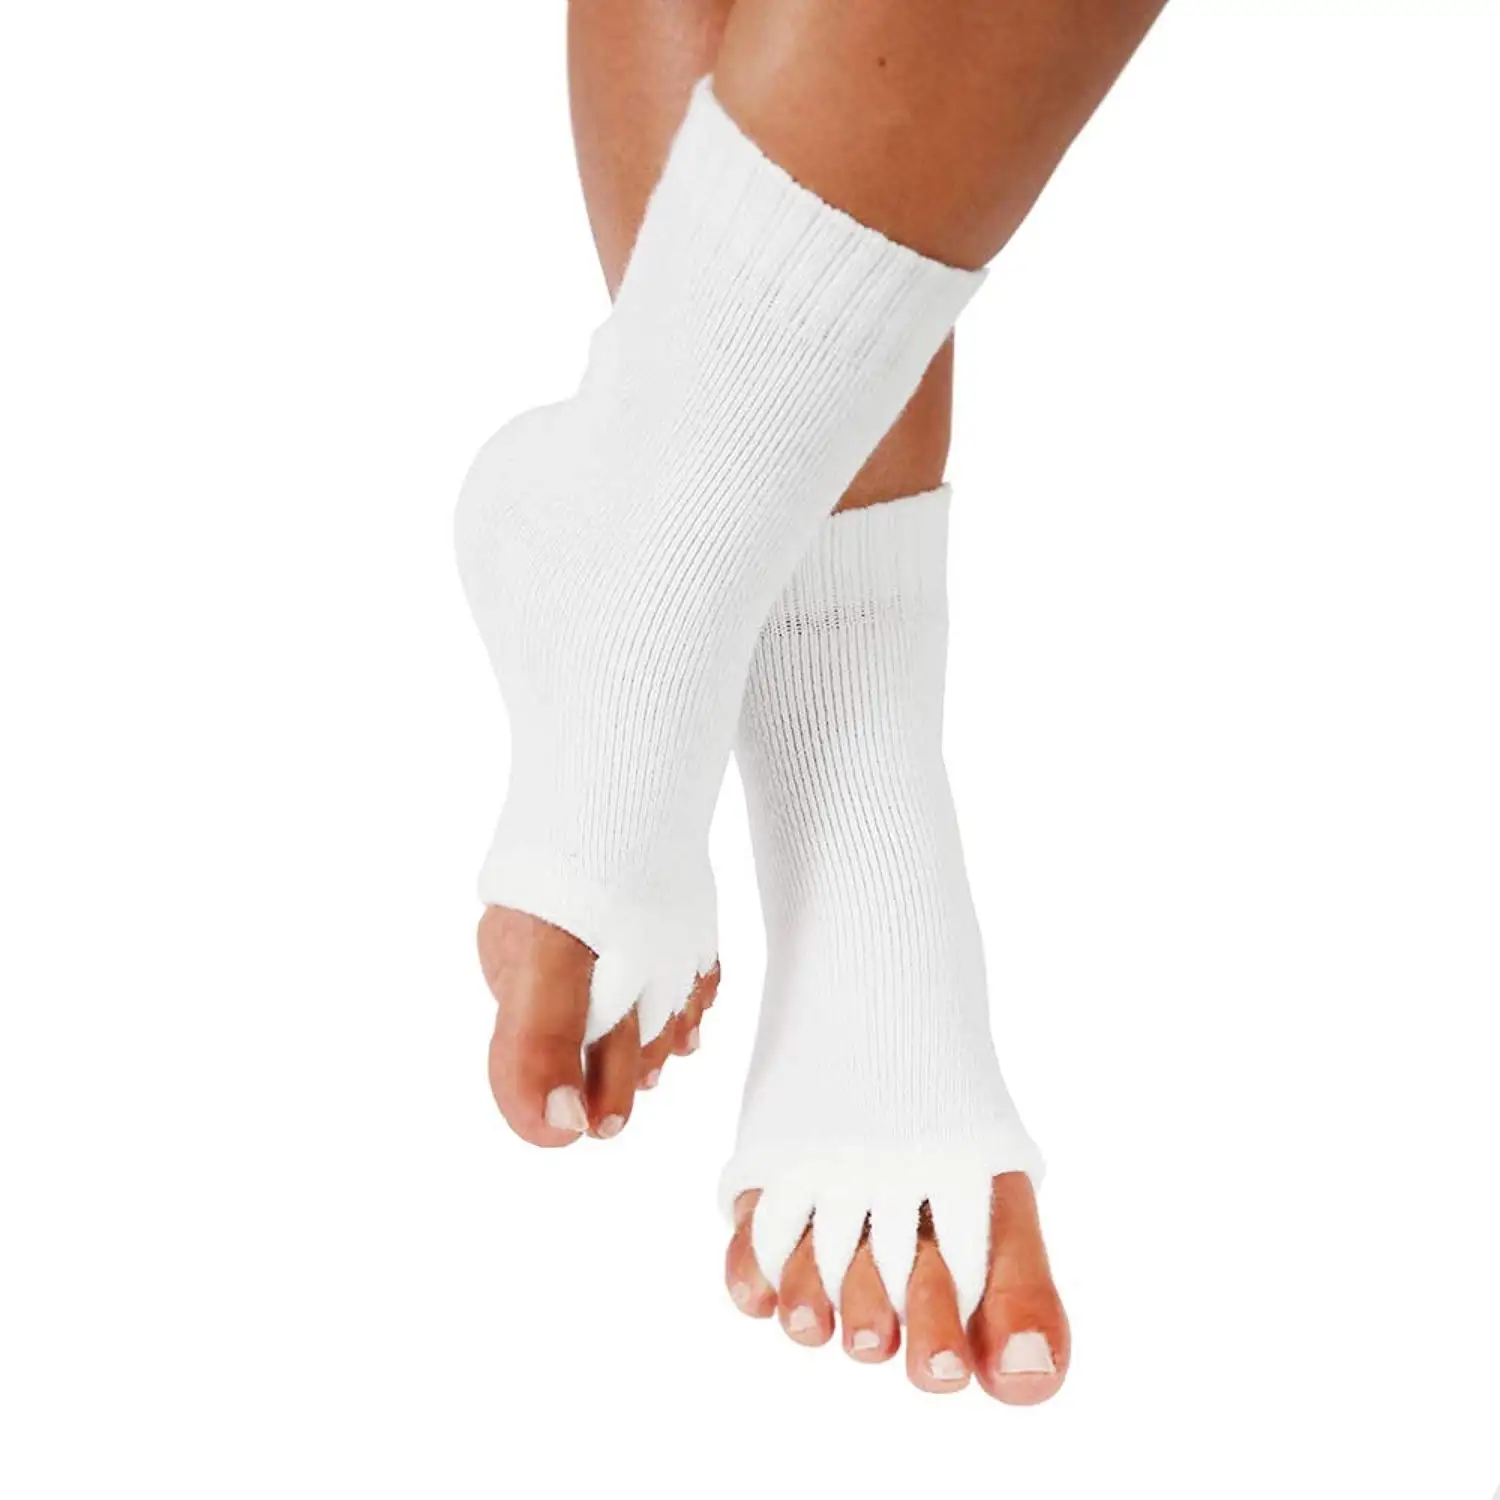 Buy 2 Packs Foot Alignment Socks Massage Toe Separator Low Cut Ankle ...